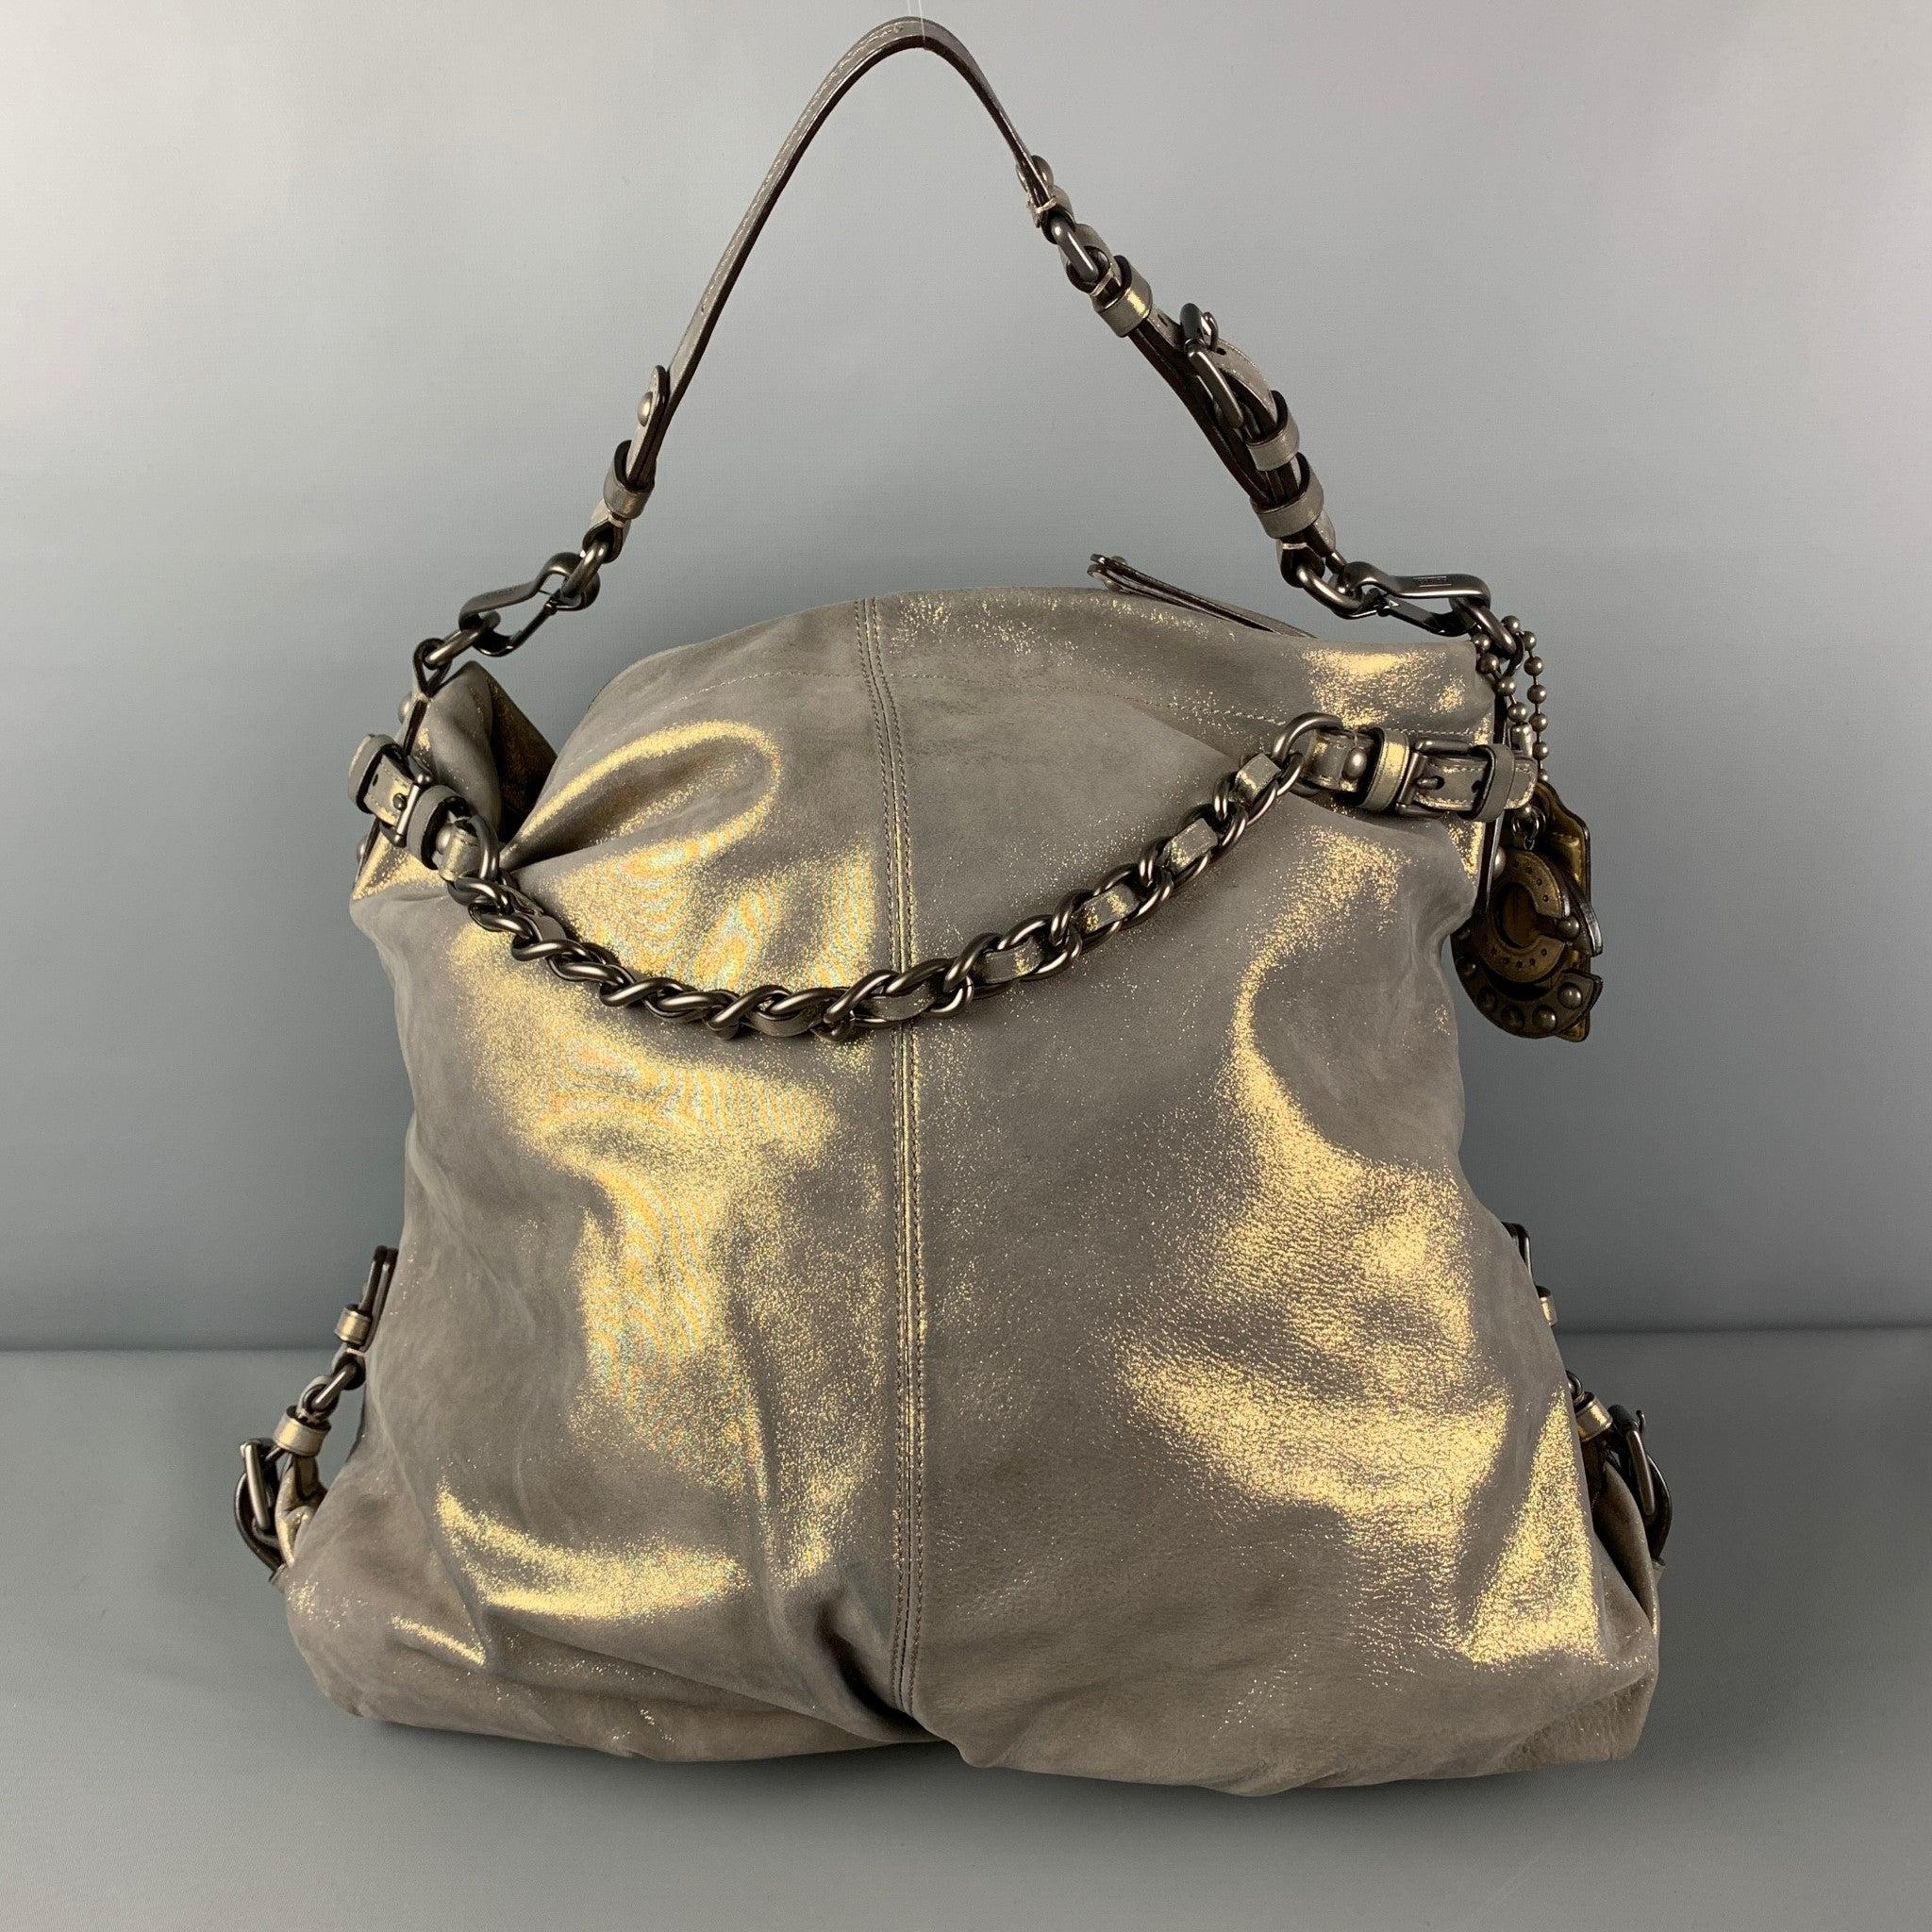 COACH Gray Metallic Leather Shoulder Bag Handbag In Good Condition For Sale In San Francisco, CA